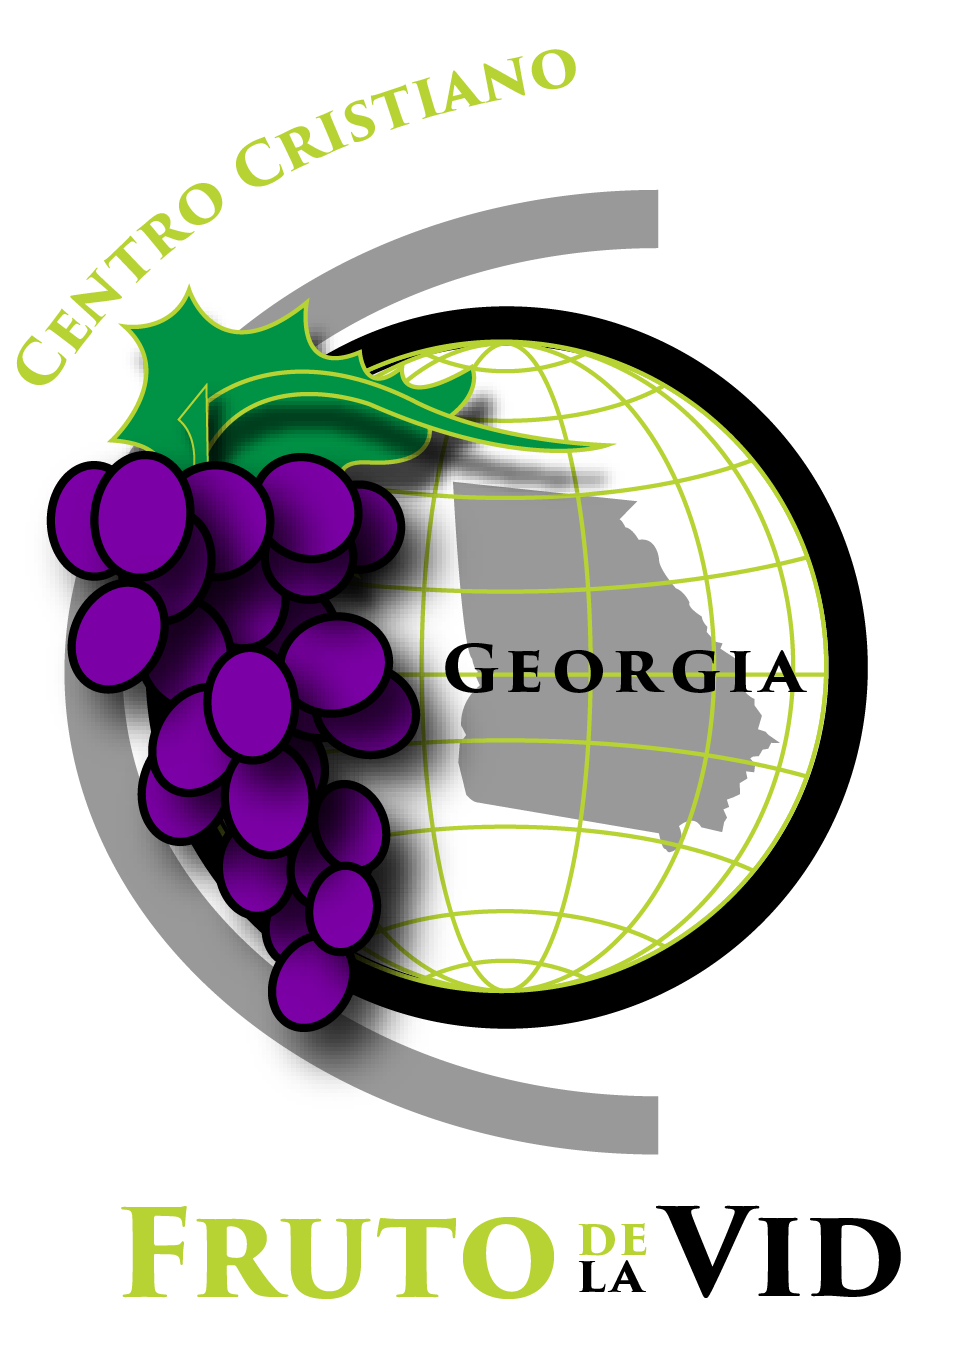 church logo fruto la vid Georgia state church church networks